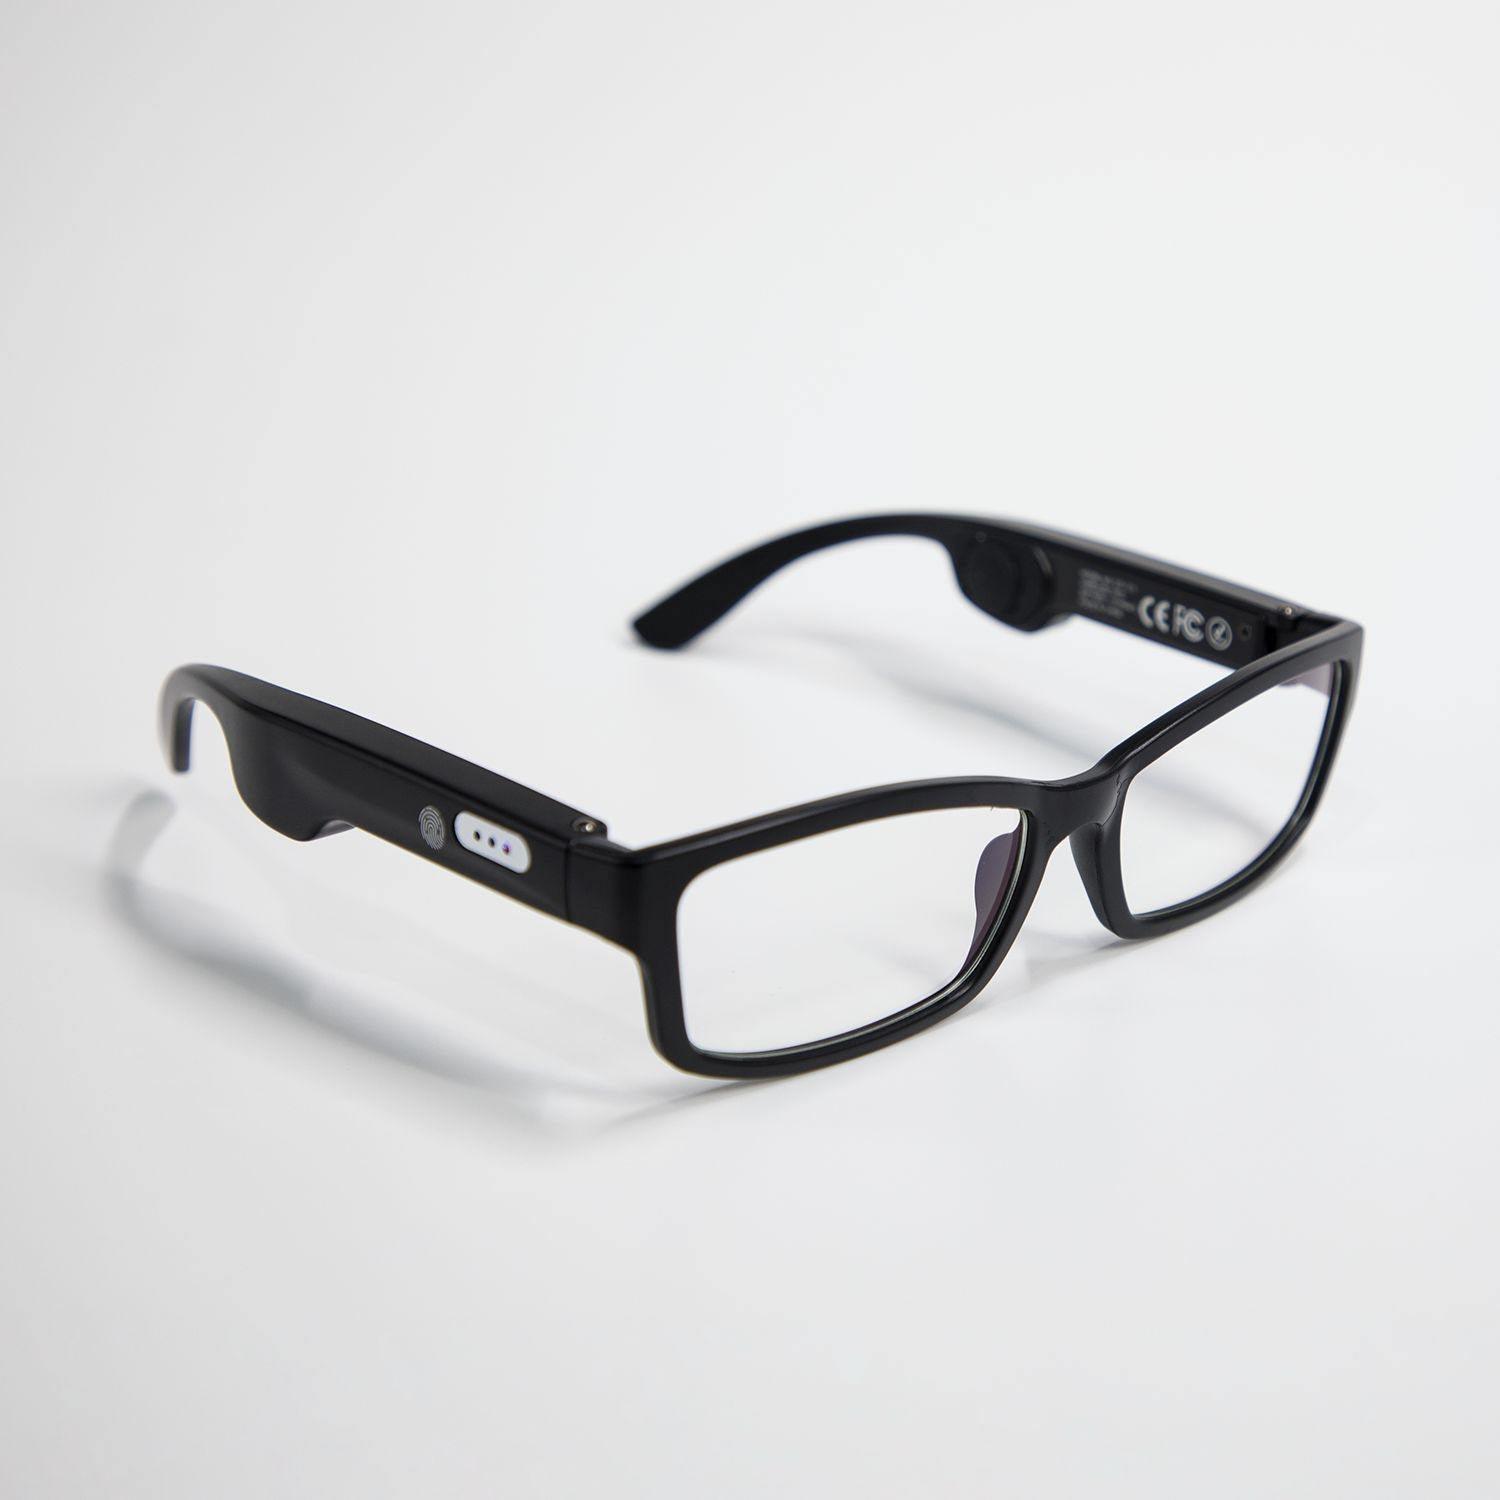 Smart Bluetooth Sunglasses Stereo Loudspeaker Multifunctional - ForVanity Sunglasses